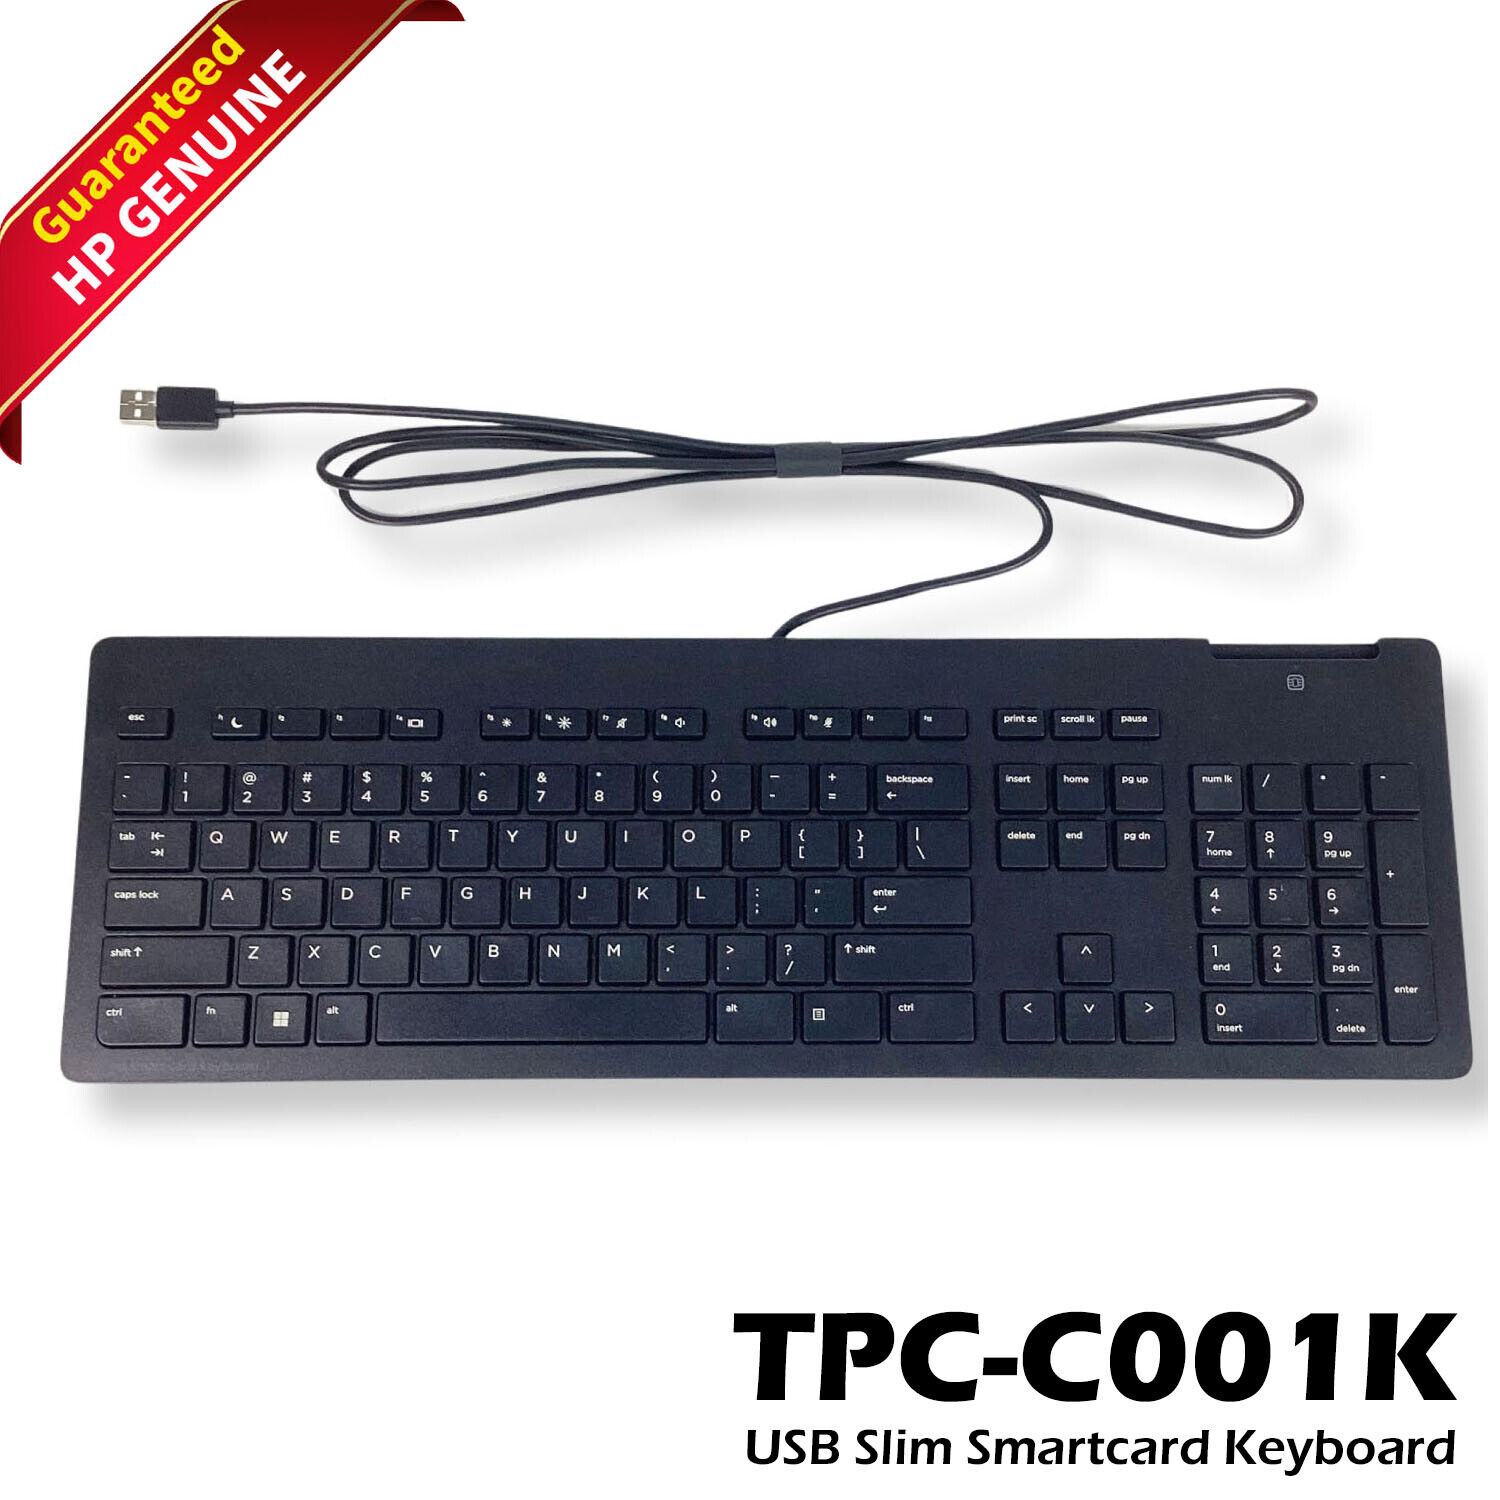 HP USB SLIM SMARTCARD READER TPC-C001K CCID KEYBOARD BLACK 911502-001 911725-001